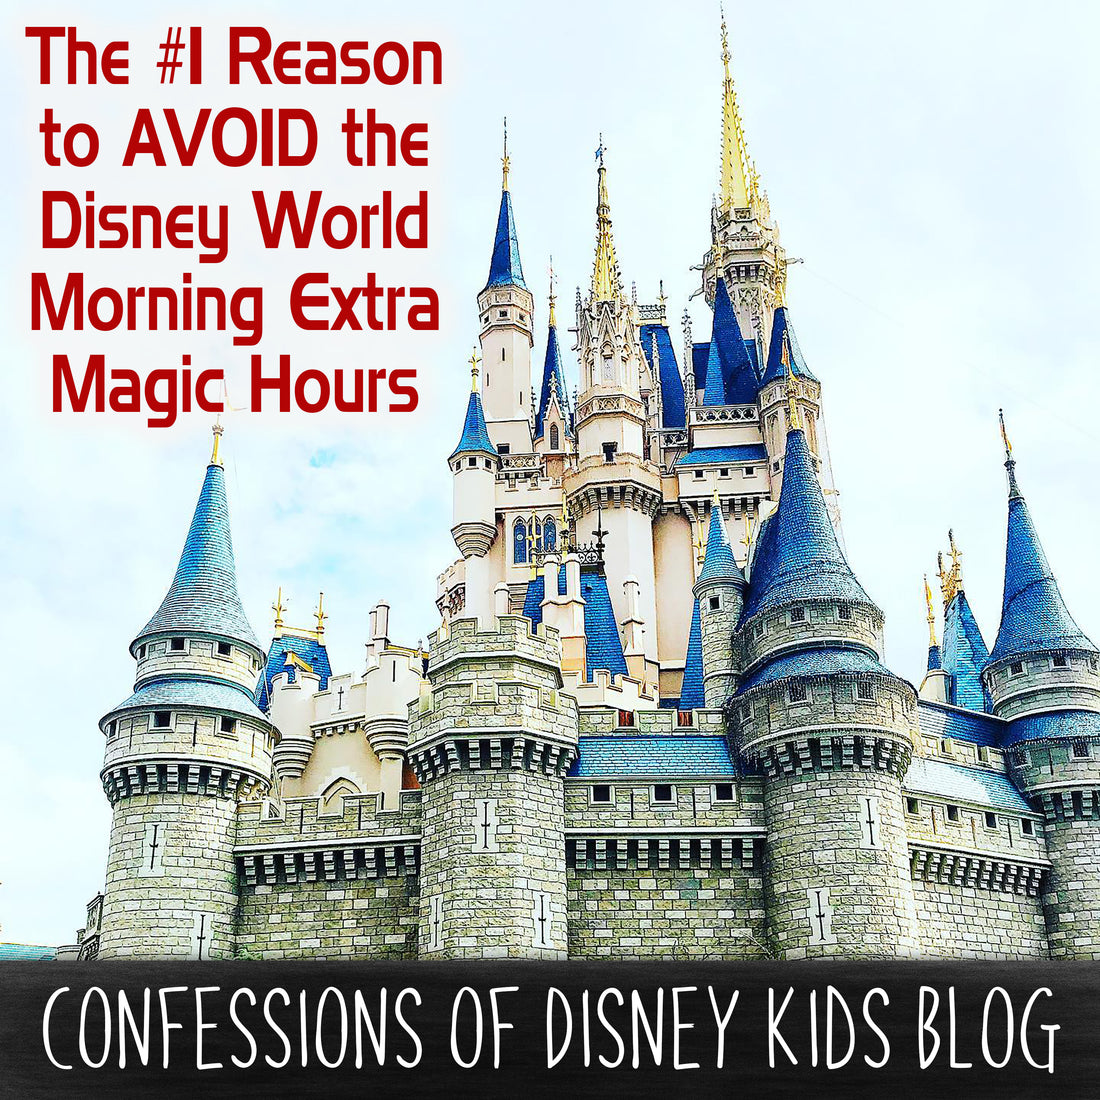 The #1 Reason to AVOID the Disney World Morning Extra Magic Hours